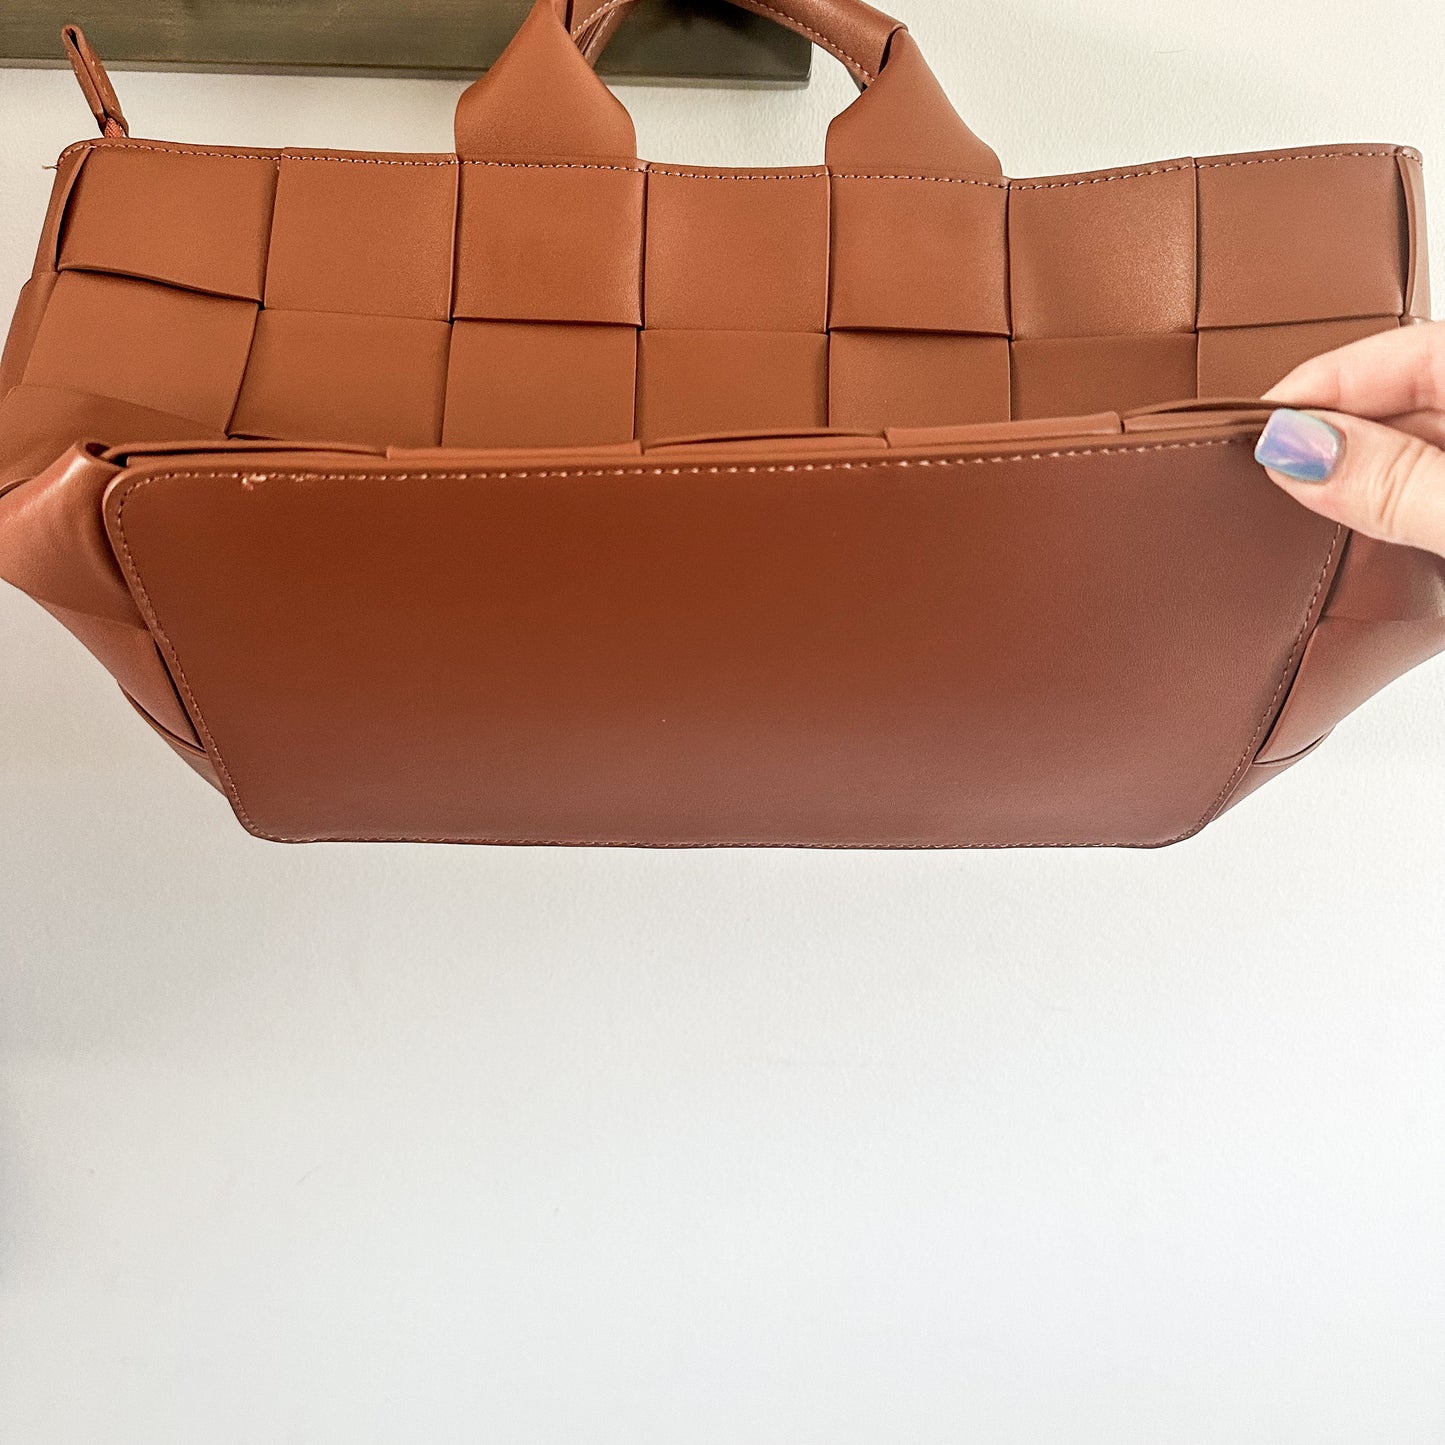 Bostanten New Brown Cruze Woven Leather Handbag